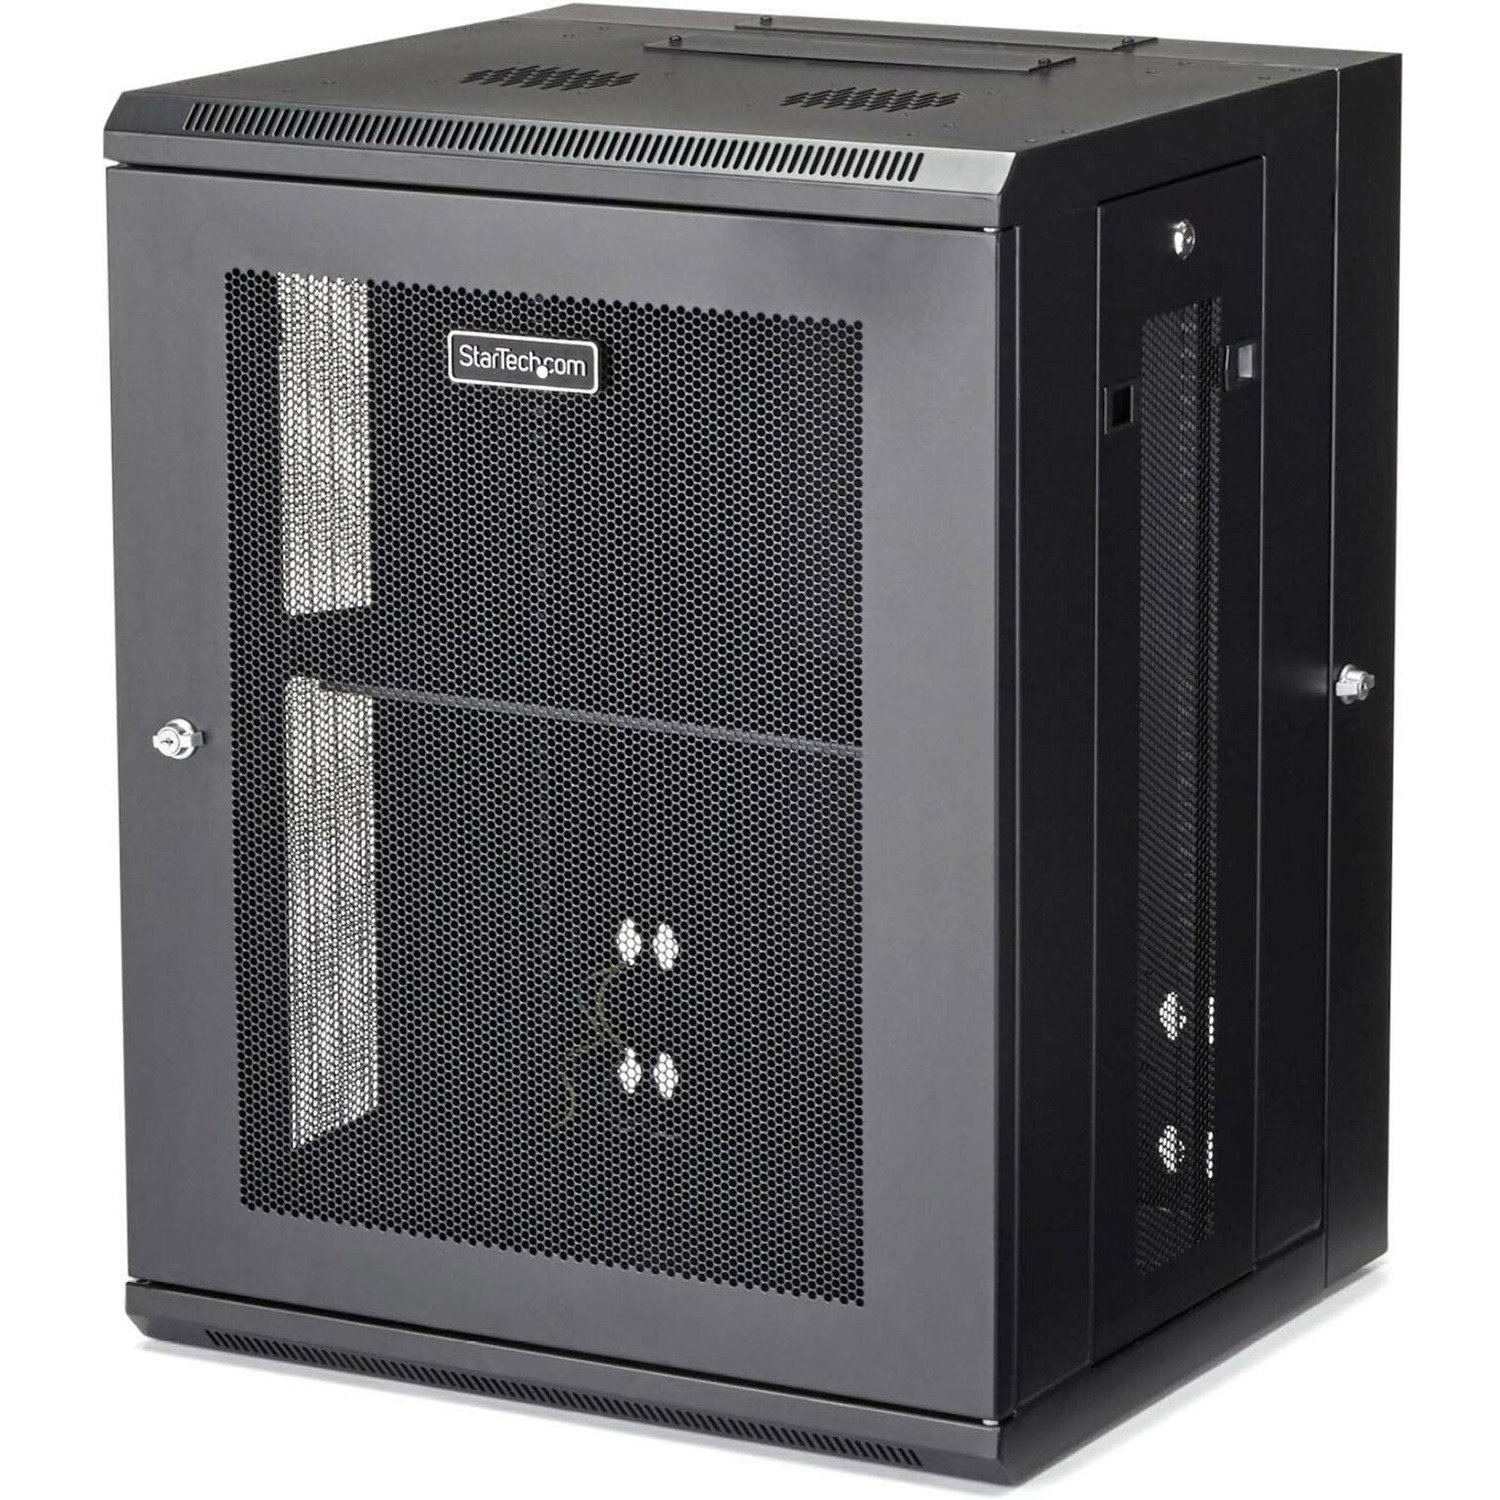 StarTech.com 15U Wall Mountable Rack Cabinet for Server, LAN Switch, Patch Panel408.94 mm Rack Depth - Black